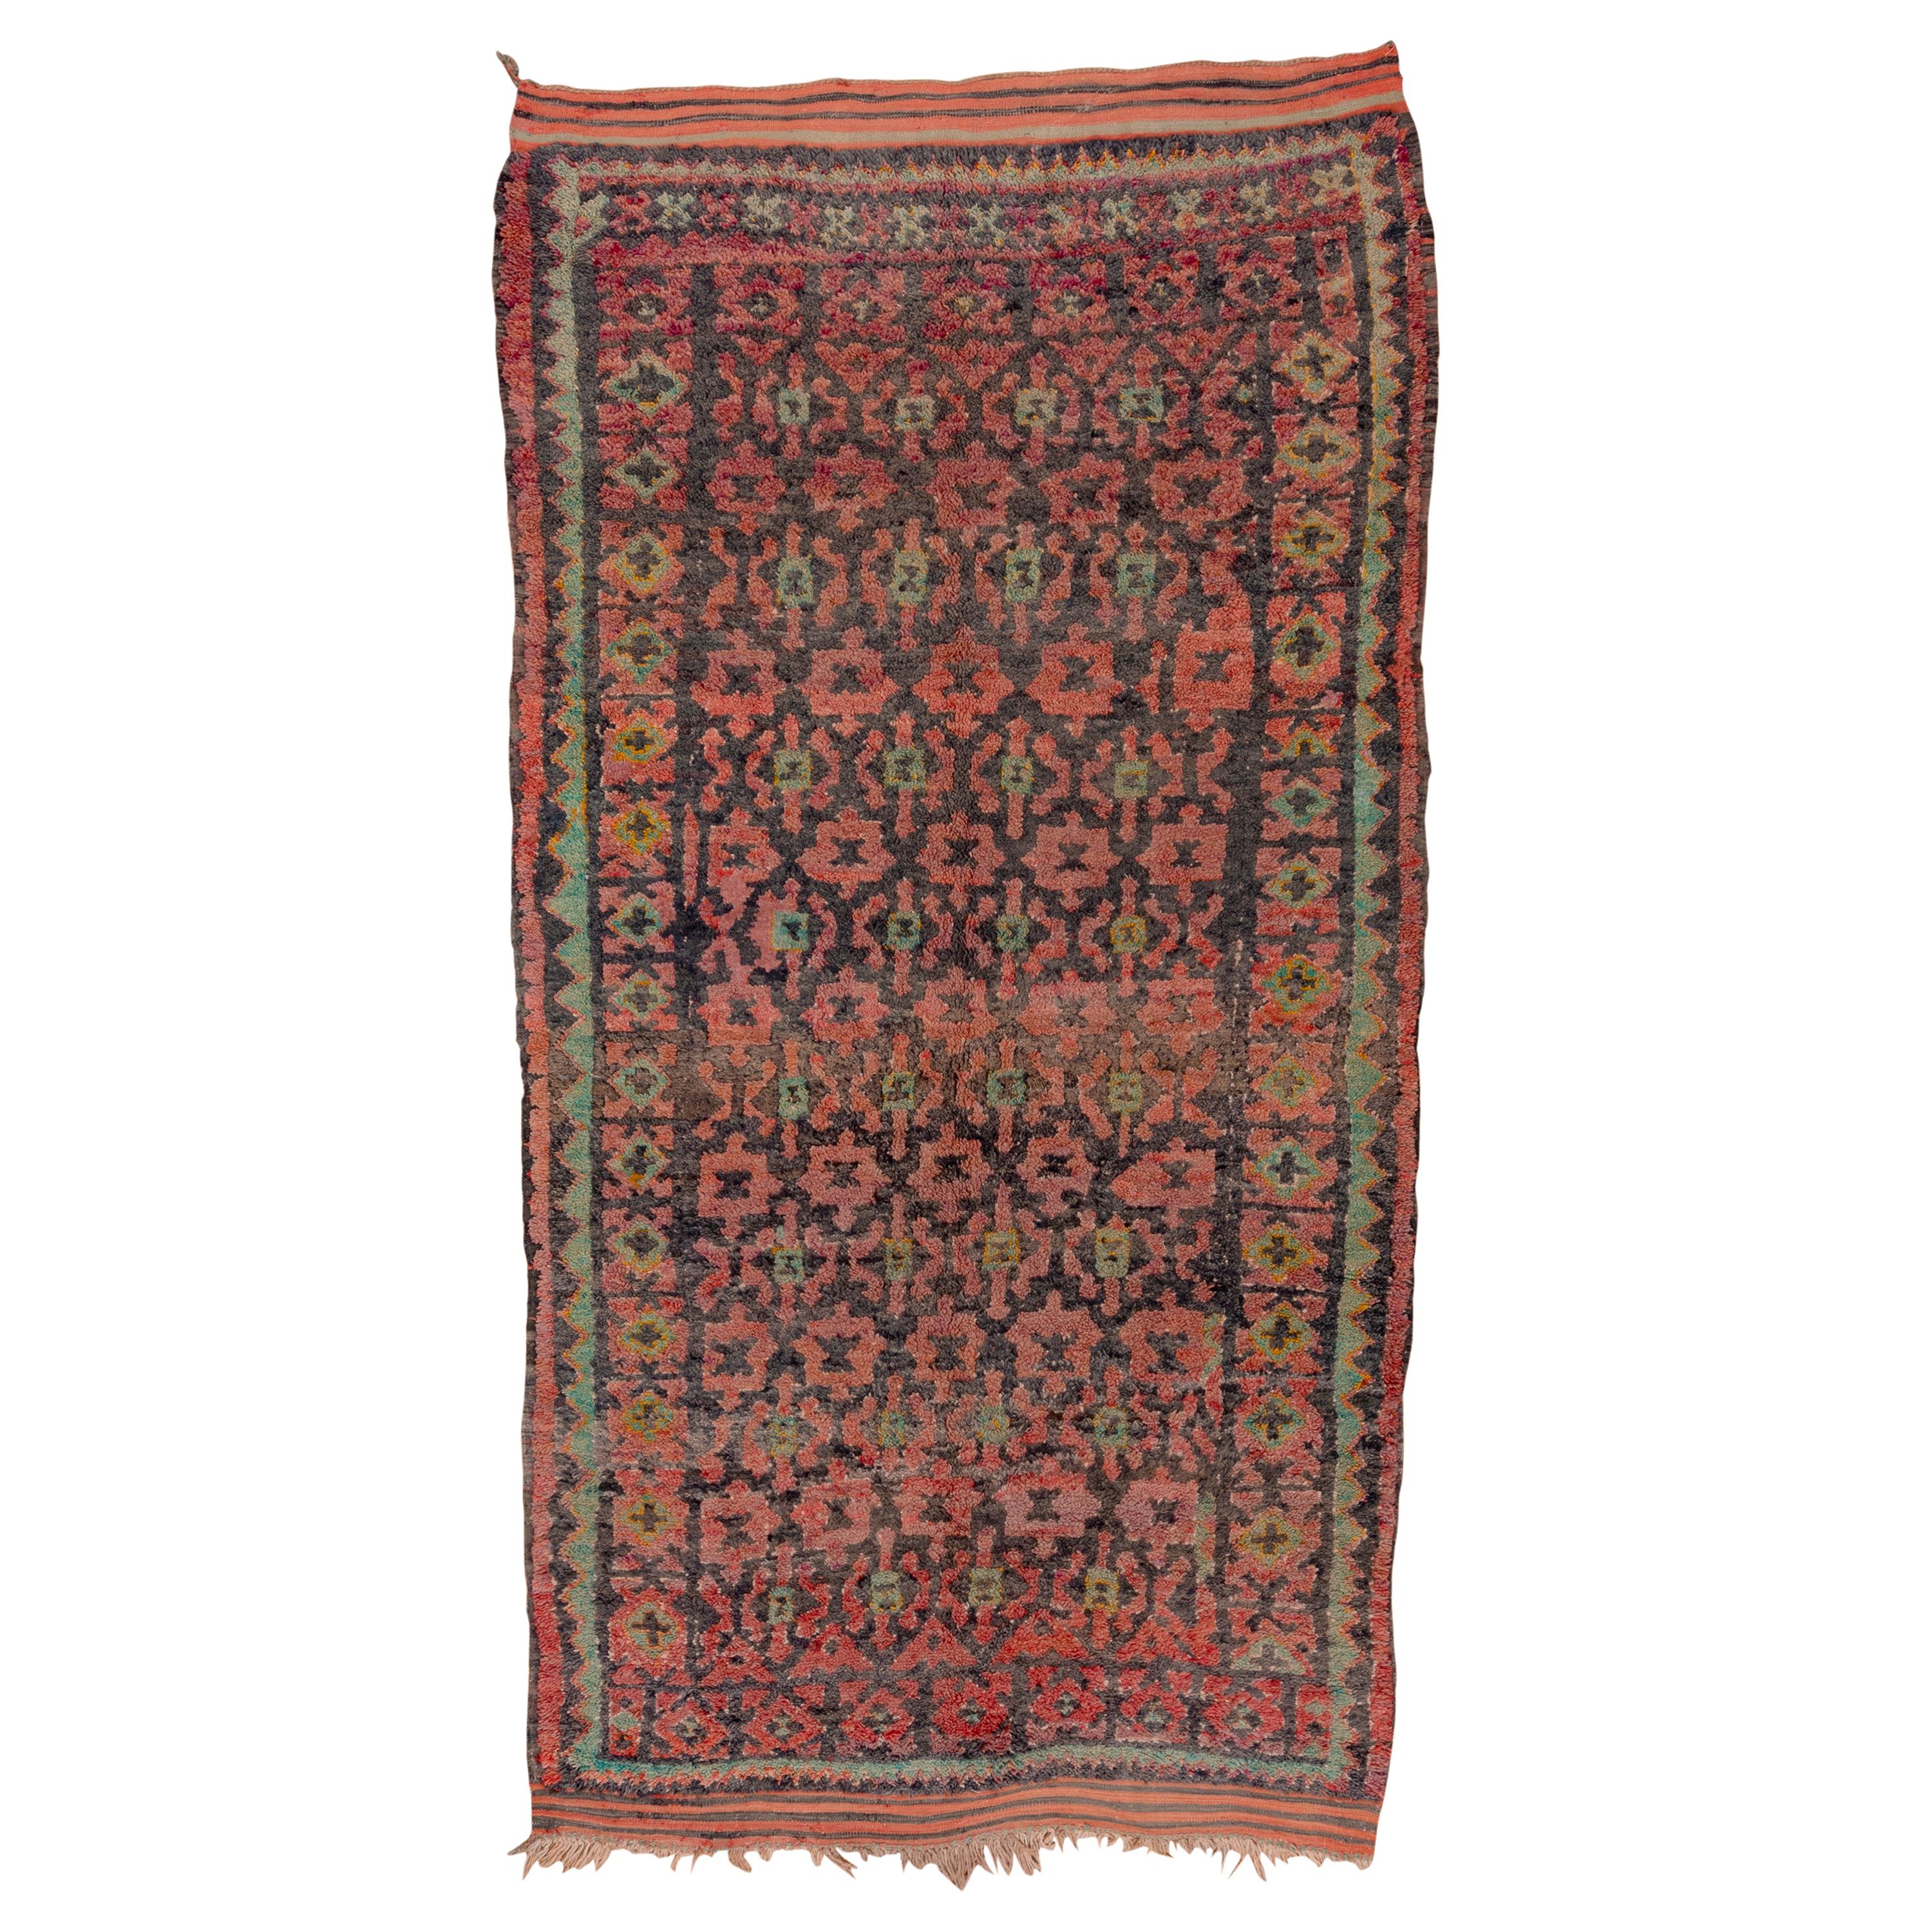 Colorful Tribal Vintage Moroccan Carpet, circa 1940s For Sale